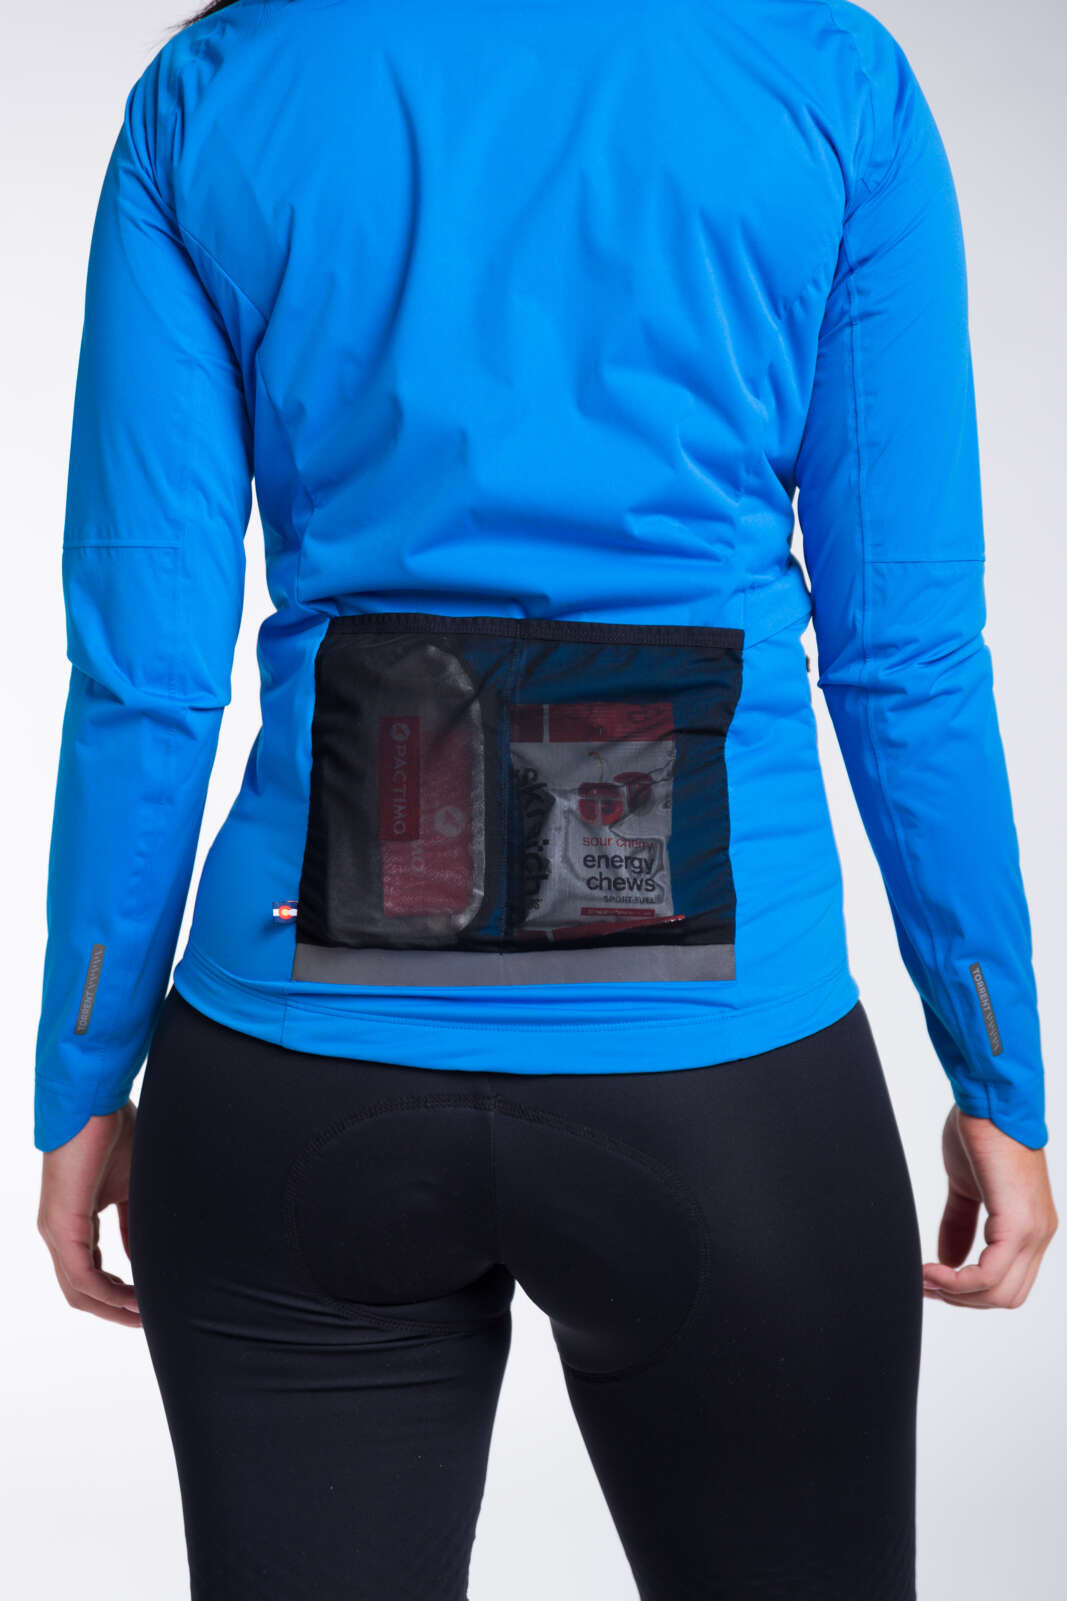 Women's Blue Waterproof Cycling Rain Jacket - Mesh Back Pockets